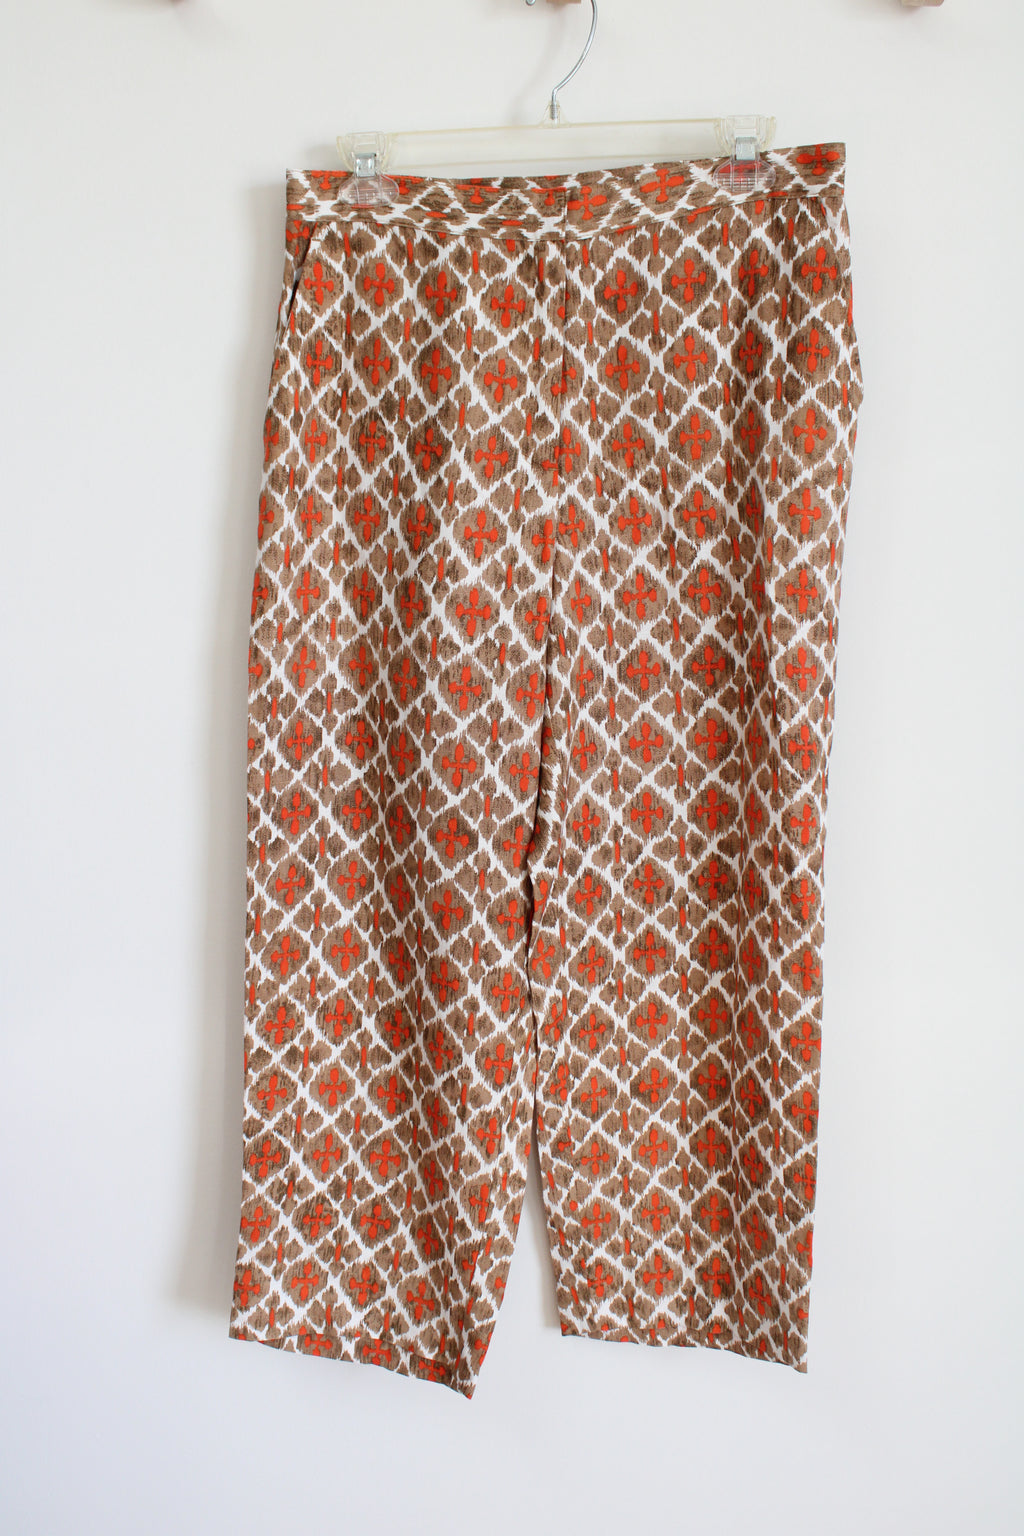 Ruby Rd. Tan & Orange Printed Linen Pants | 10